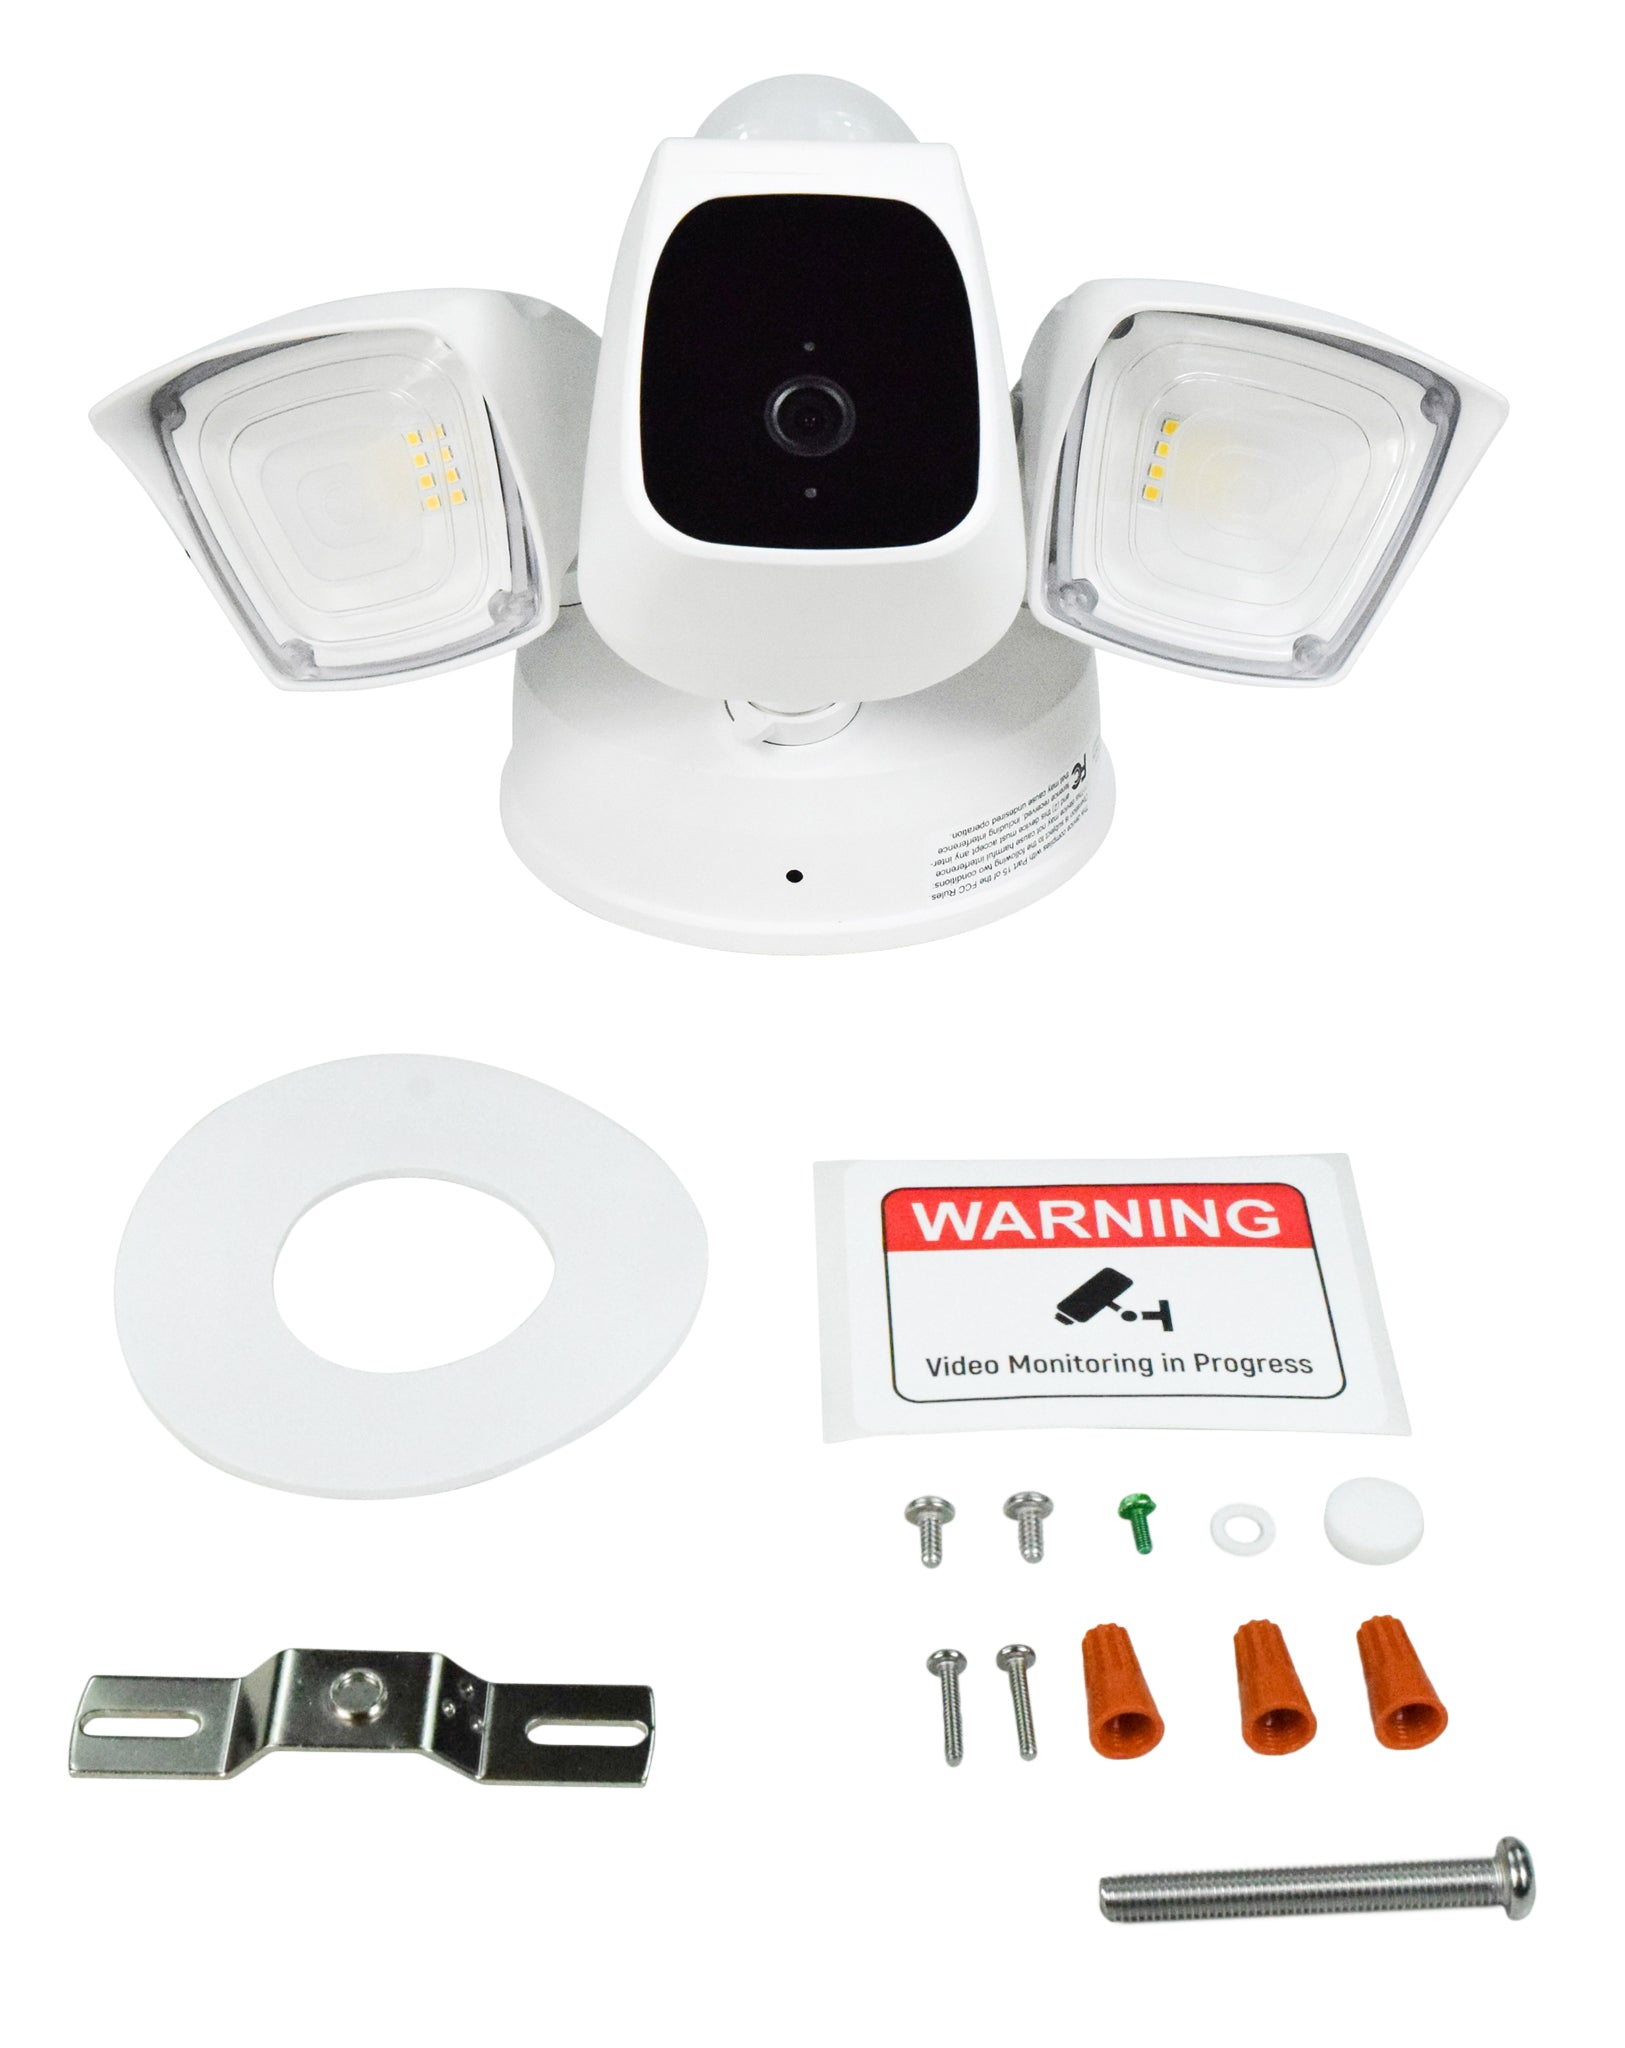 LED Smart Security Flood Lights With Camera